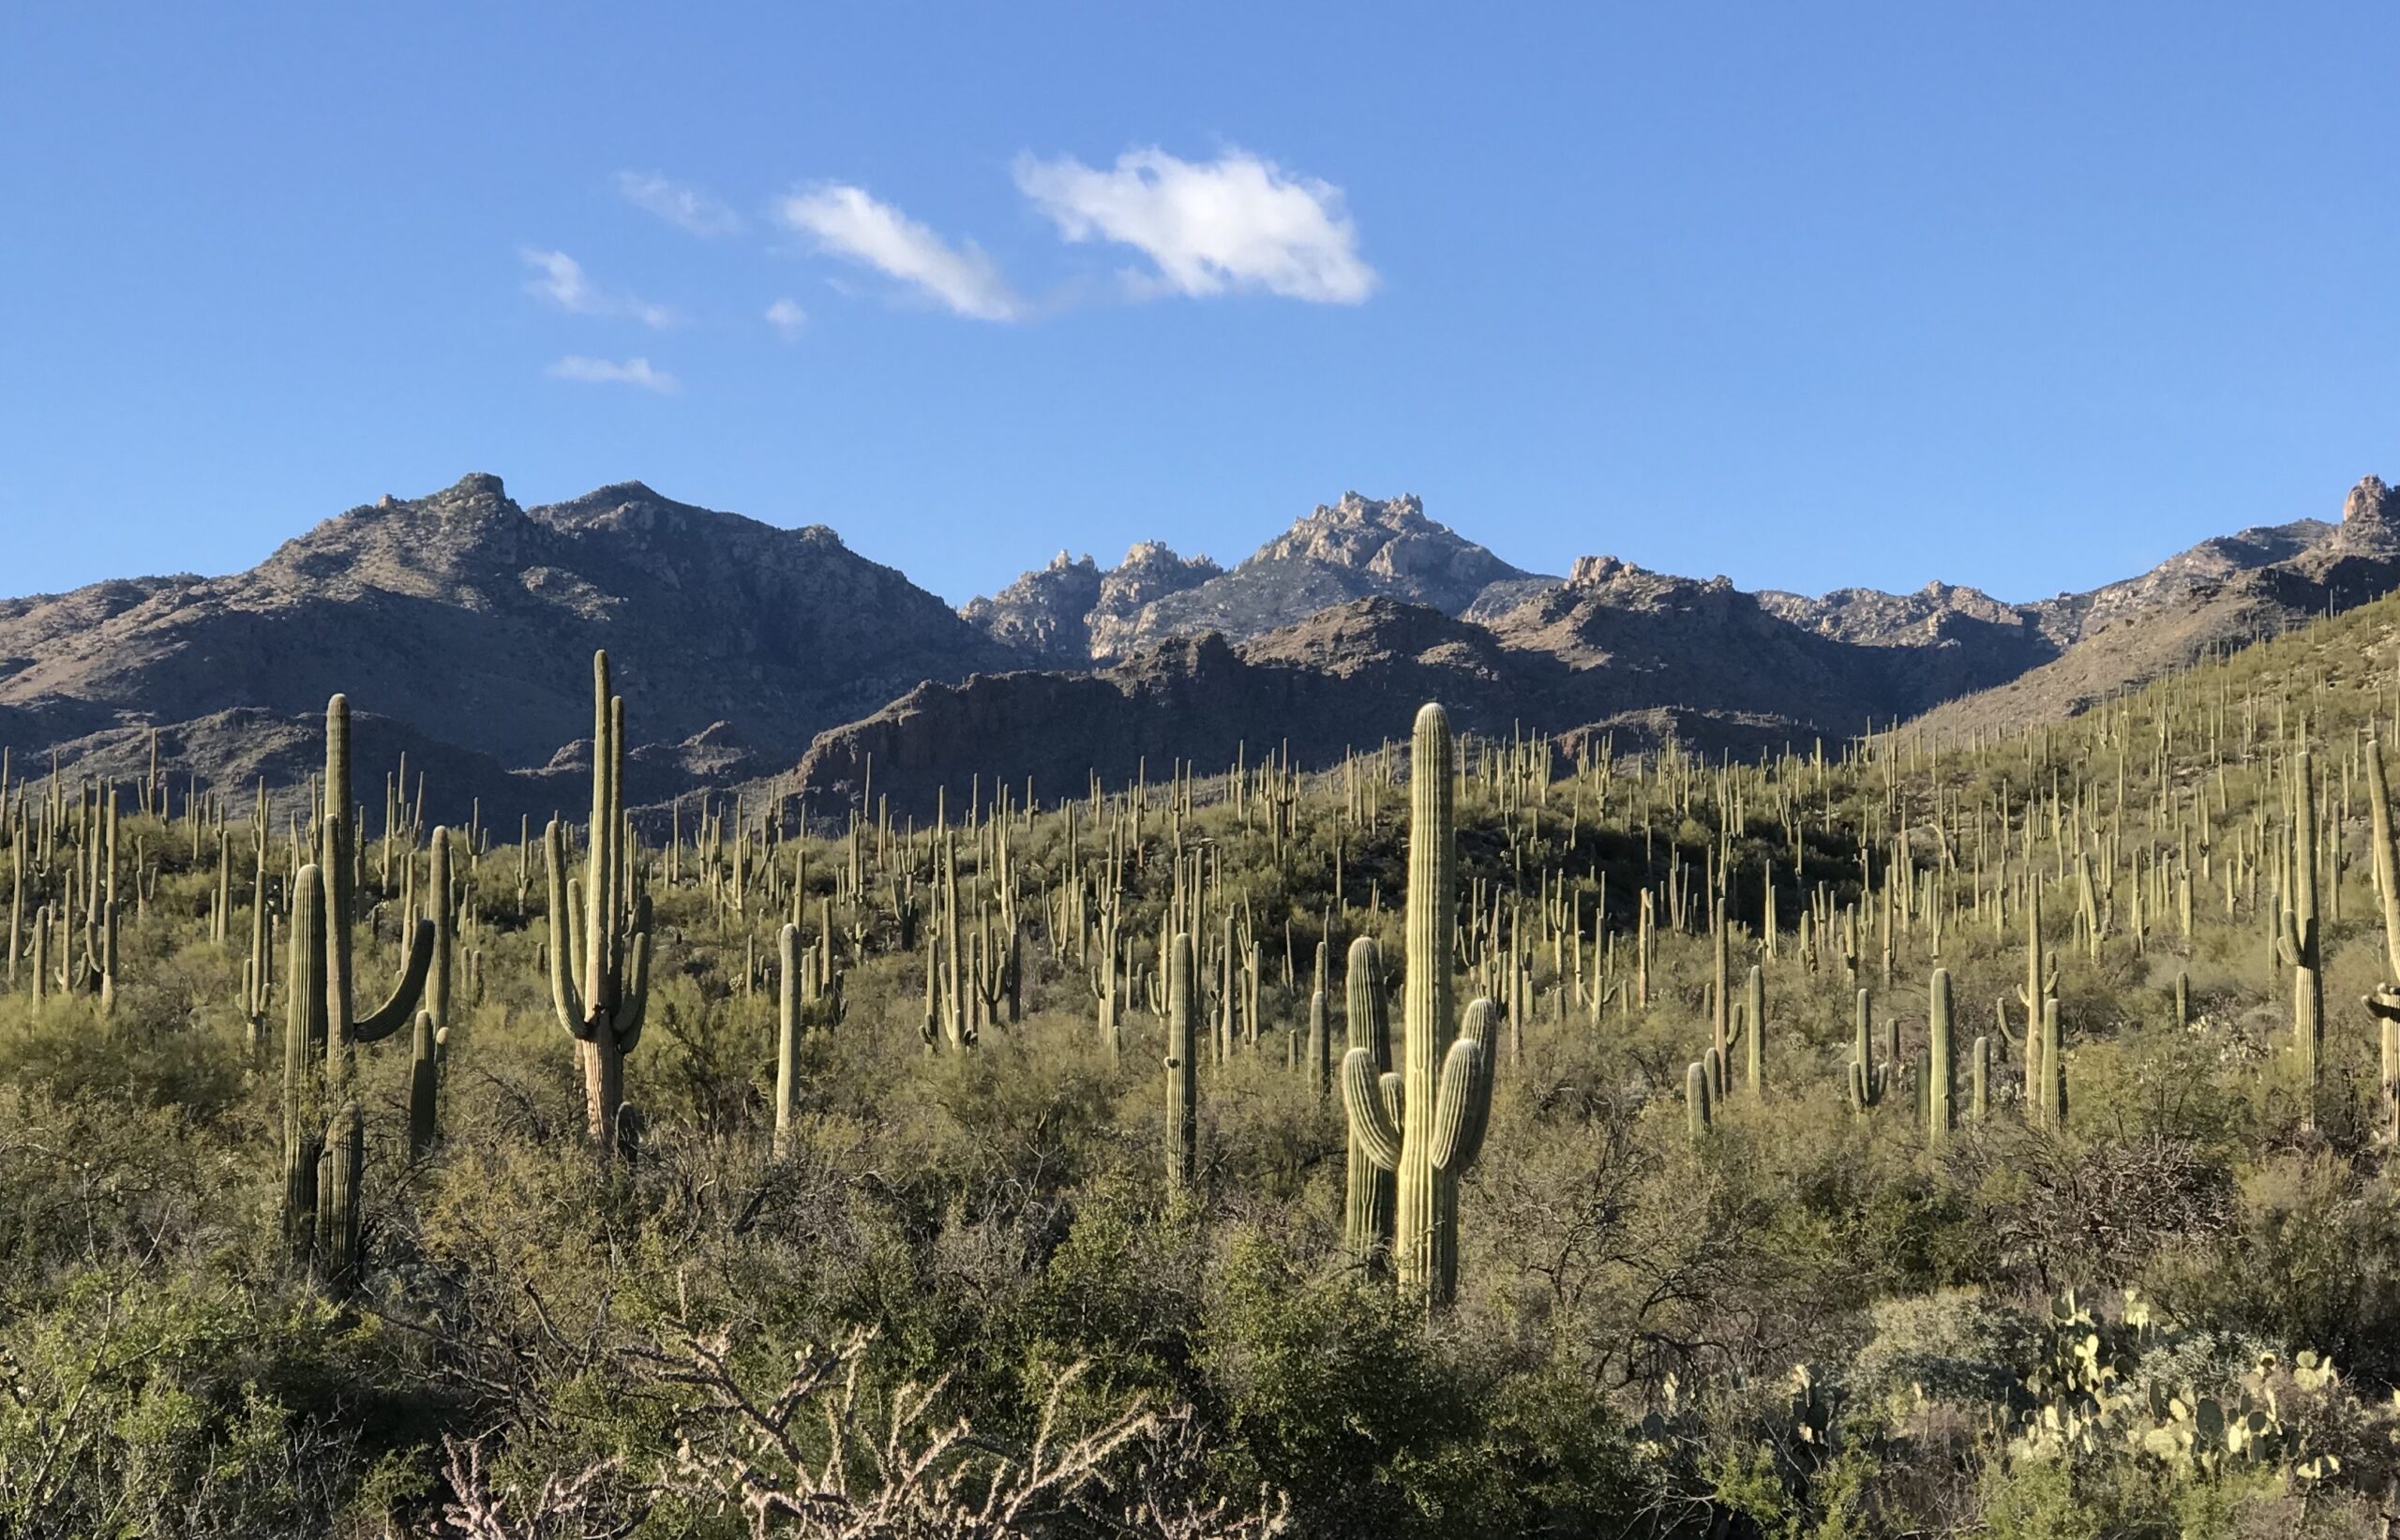 Cactuses in Saguaro National Park, Arizona